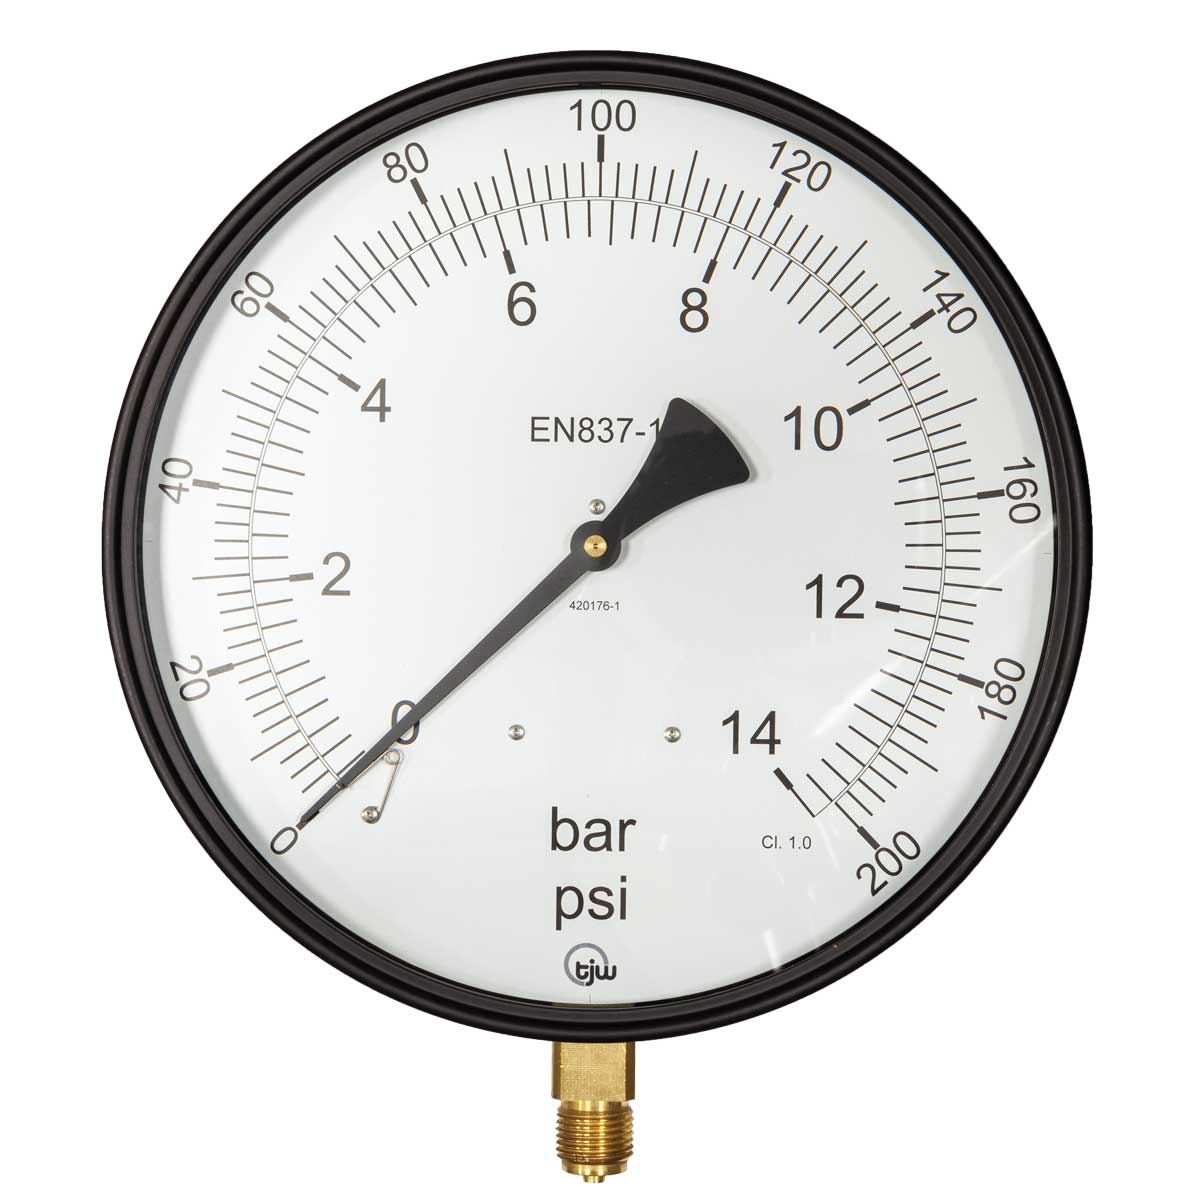 10" Dial Pressure Gauge 0-200PSI/Bar 1/2"BSP Bottom Connection